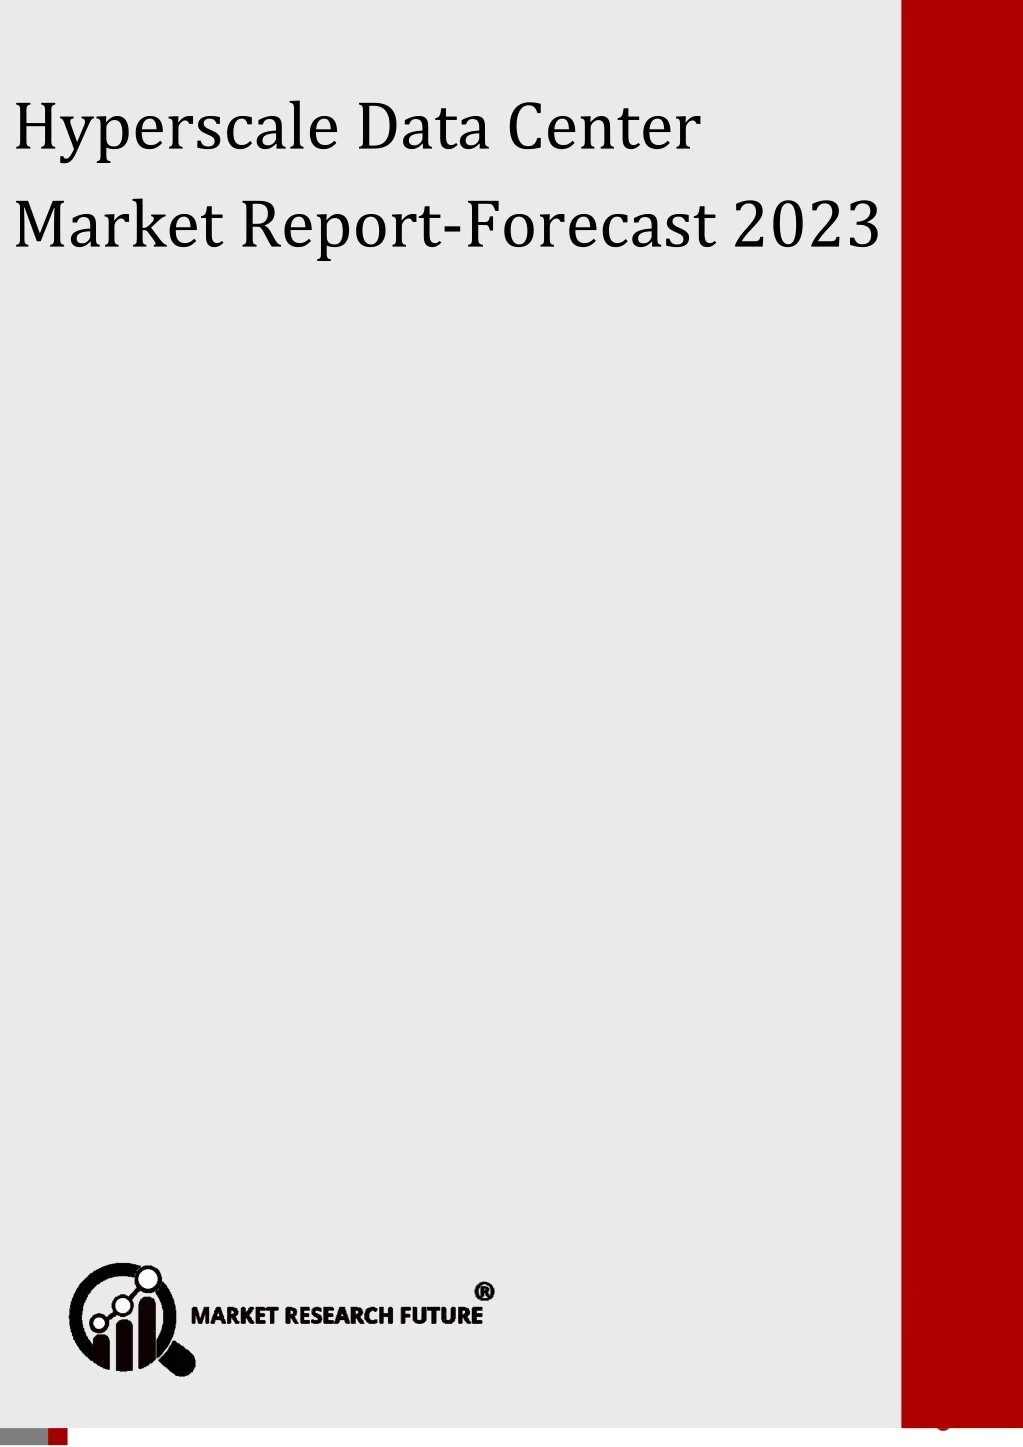 hyperscale data center market forecast 2023